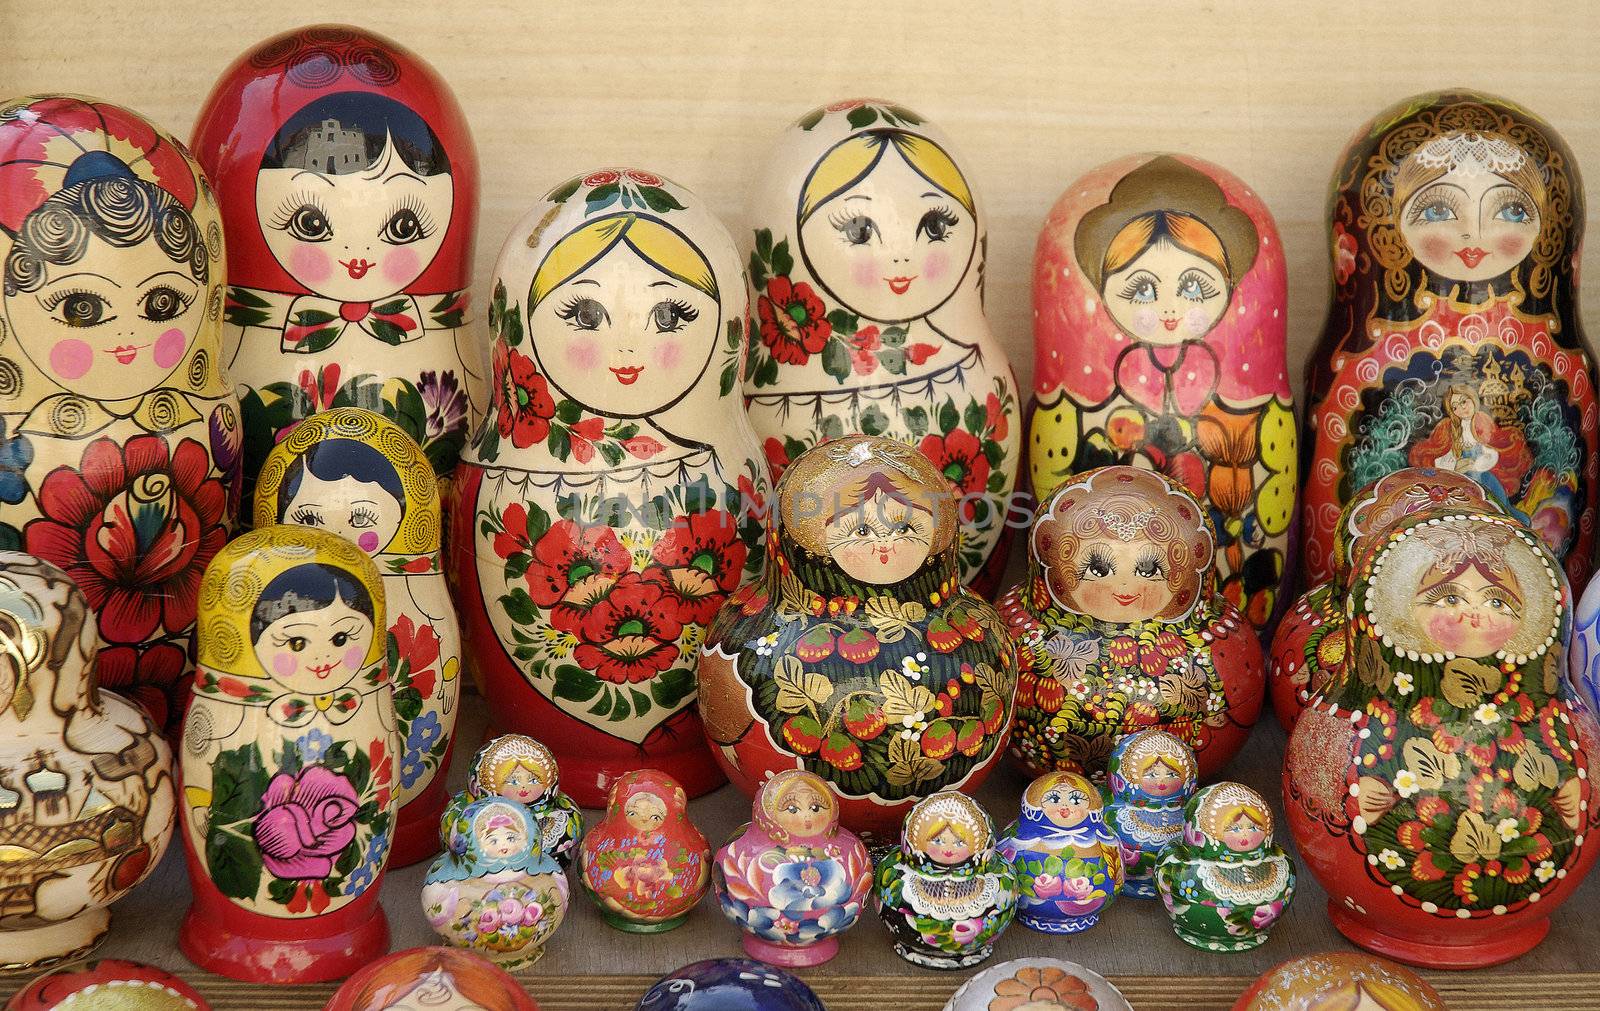 russian matryoshka dolls by jackmalipan